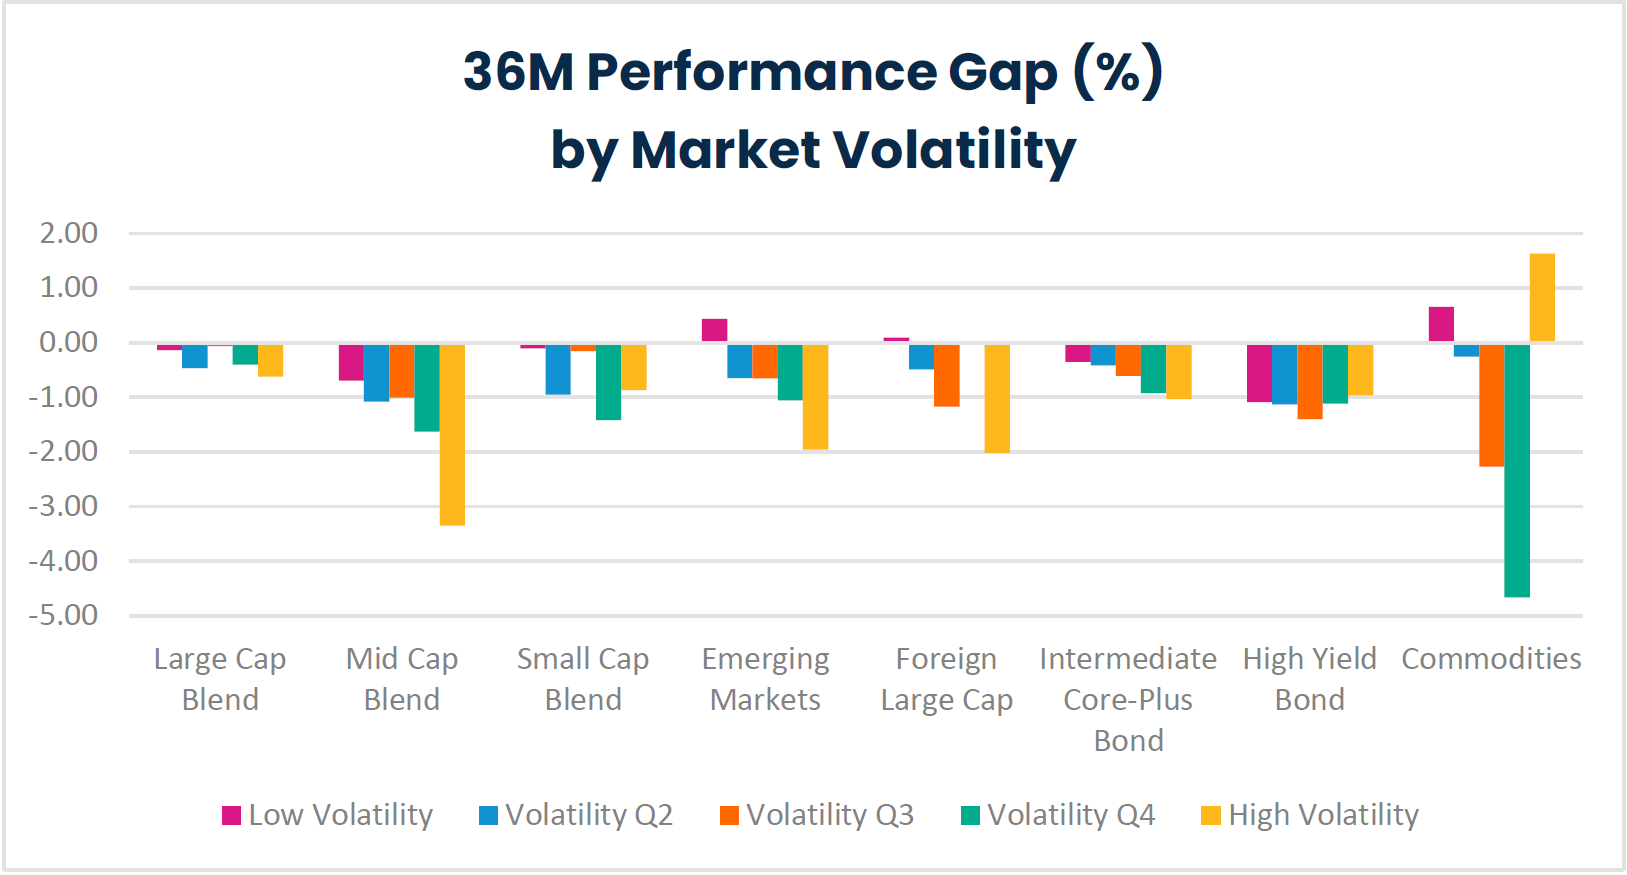 36M Performance Gap (%) by Market Volatility